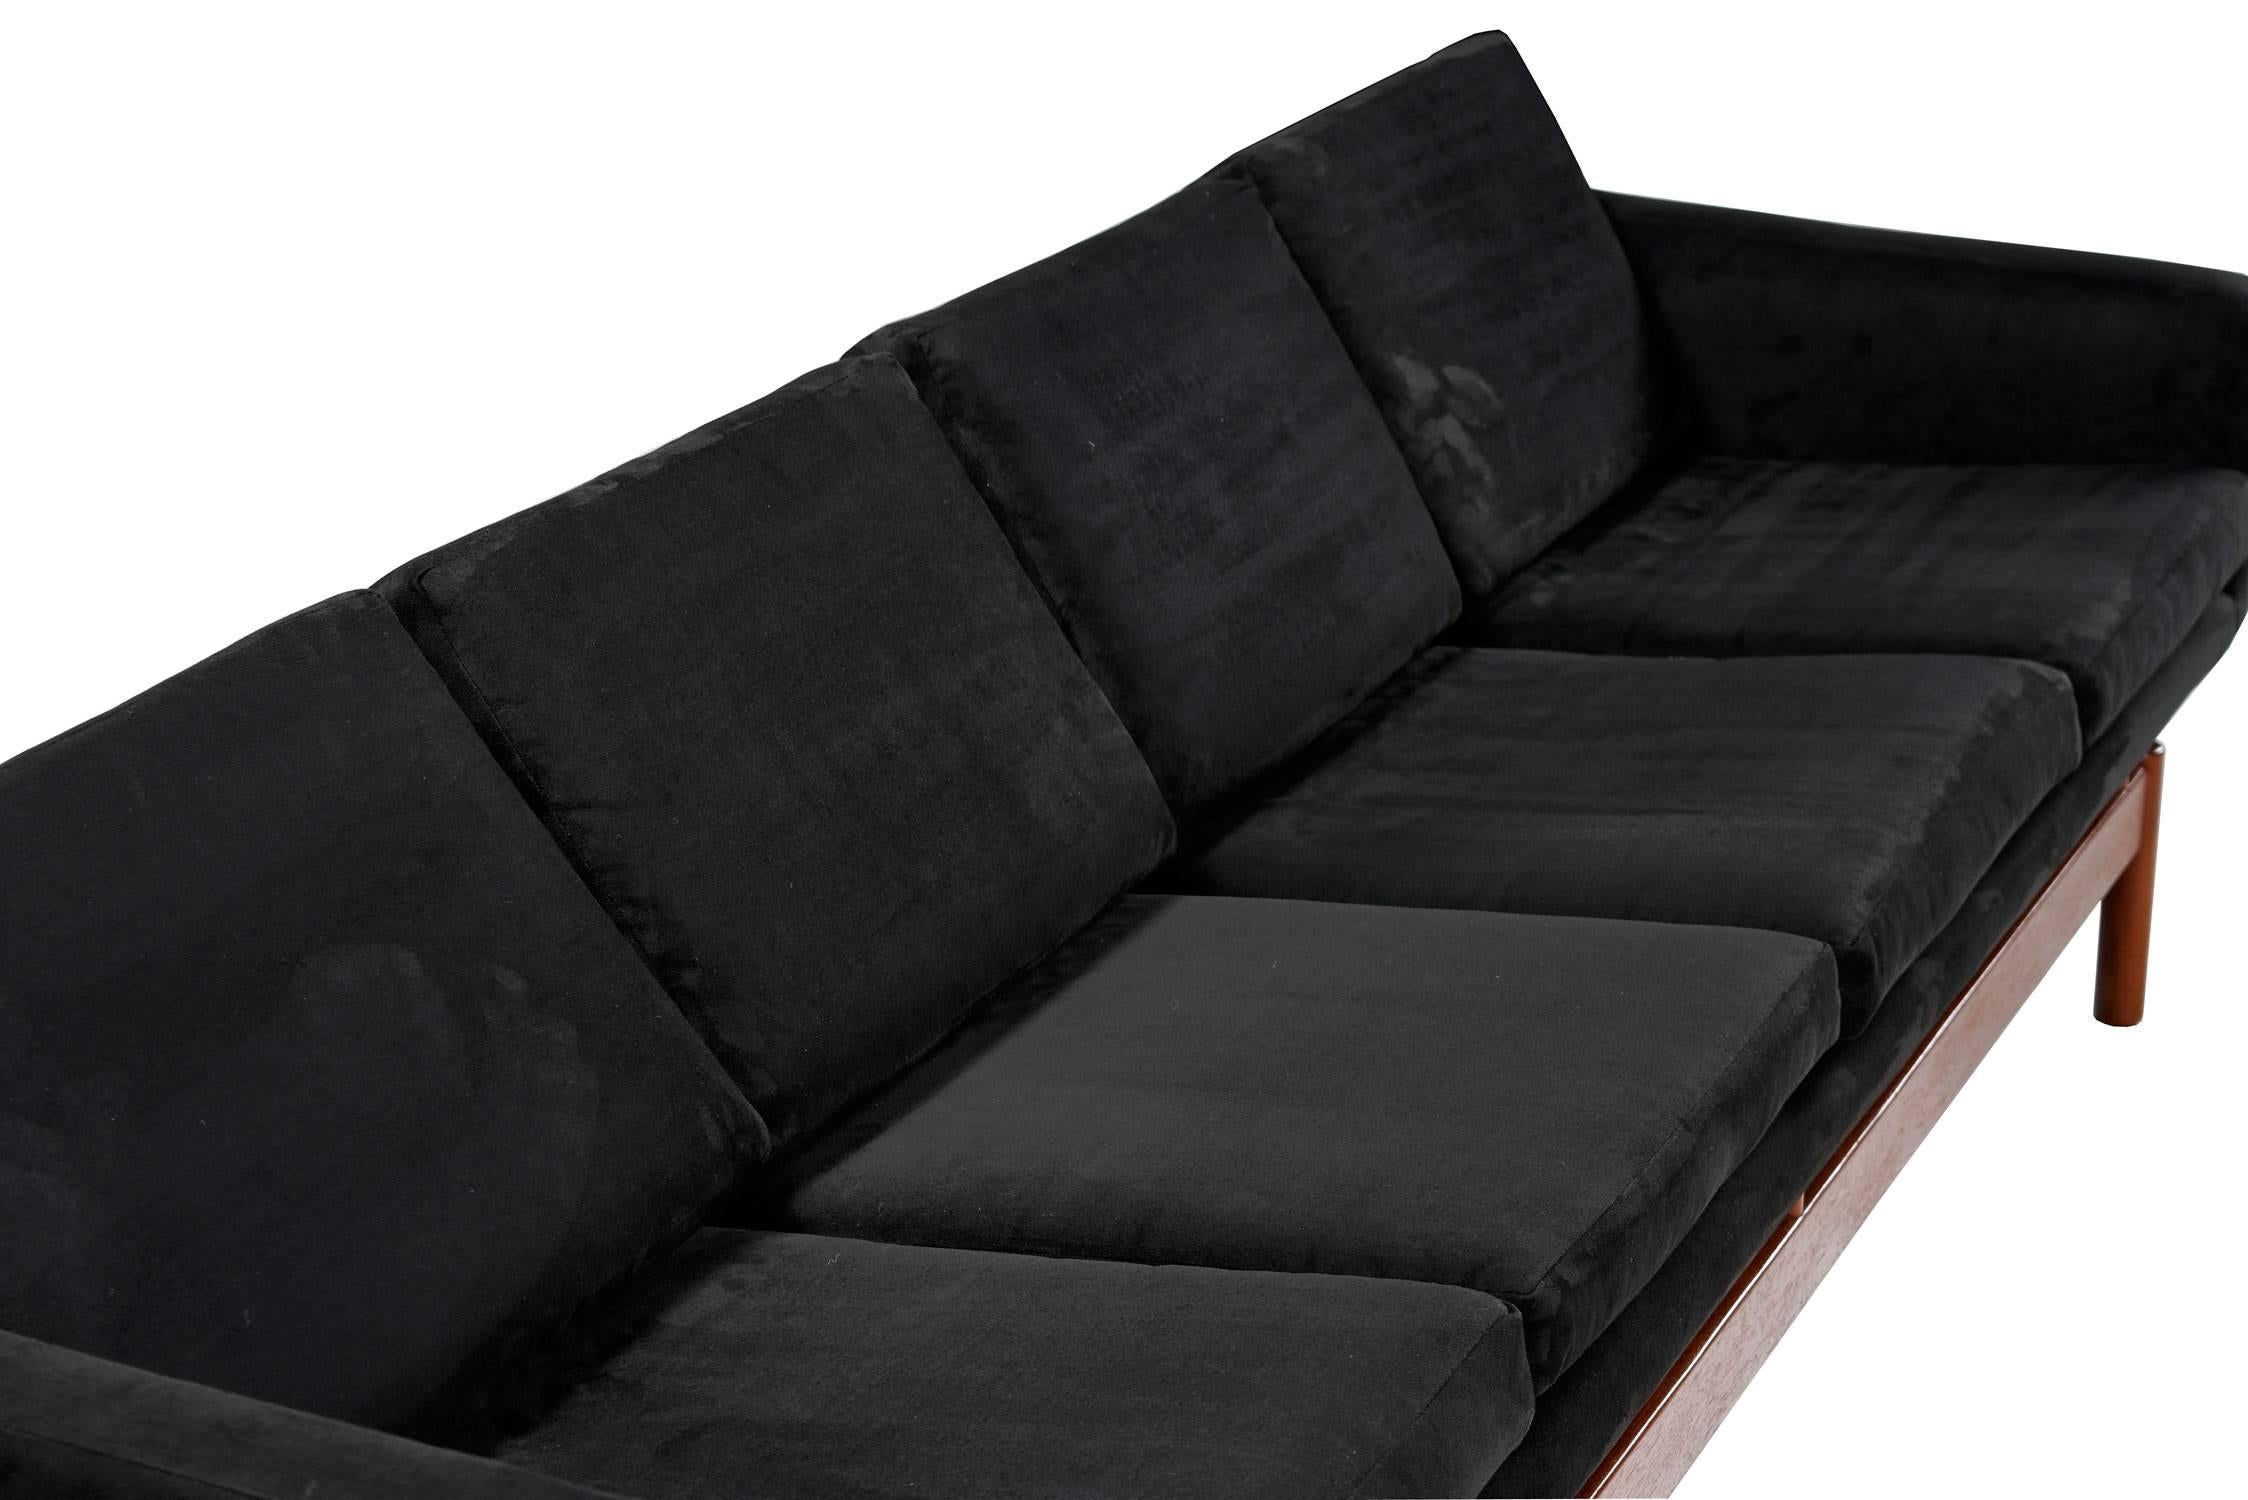 Mid-20th Century Danish Teak Sofa Mid-Century Modern Hans Wegner Style Four-Seat Sofa Couch